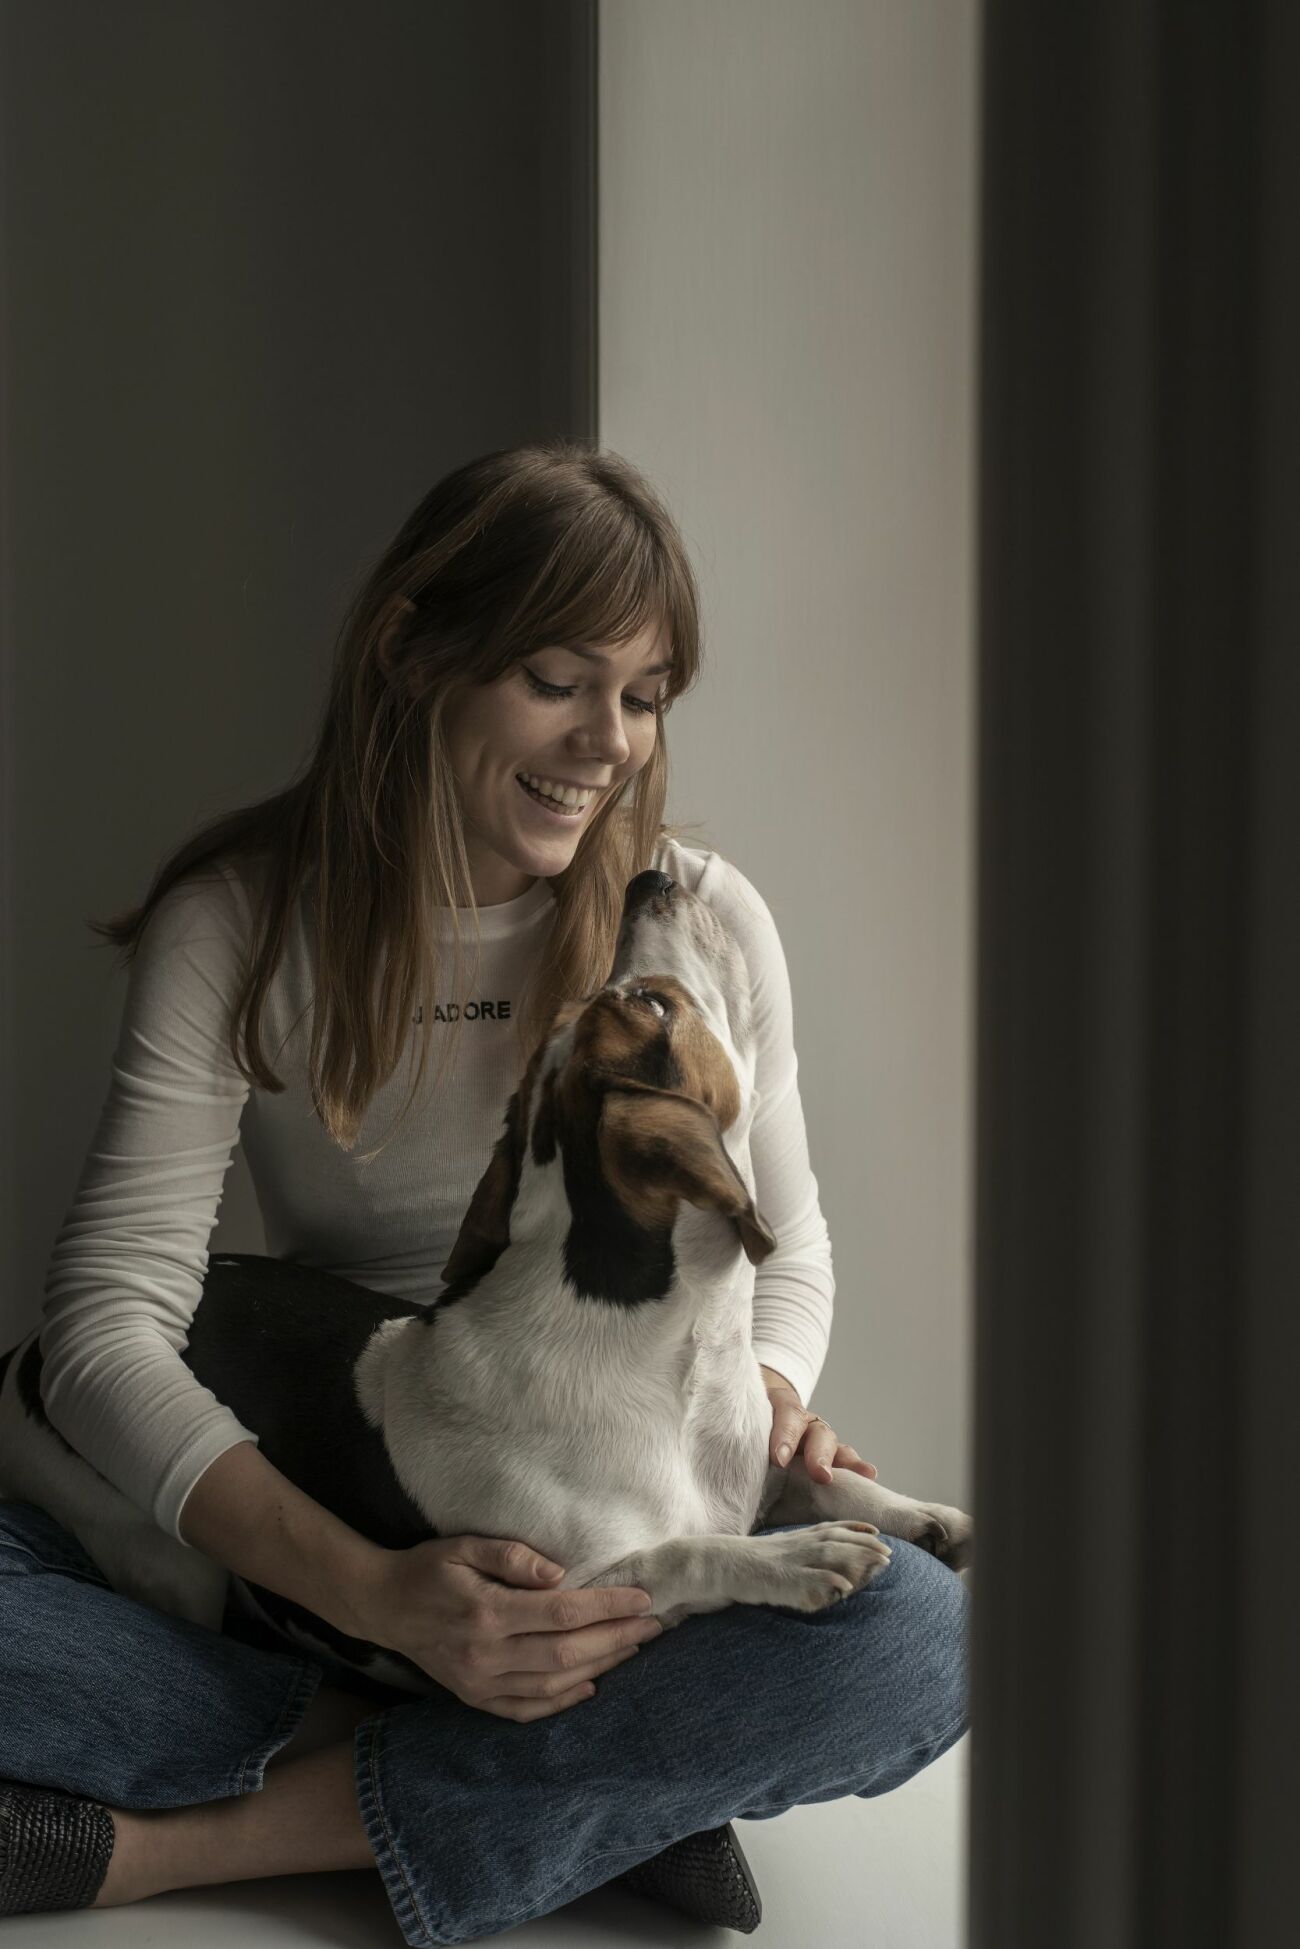 Modefotografen Sara Bille med sin beagle